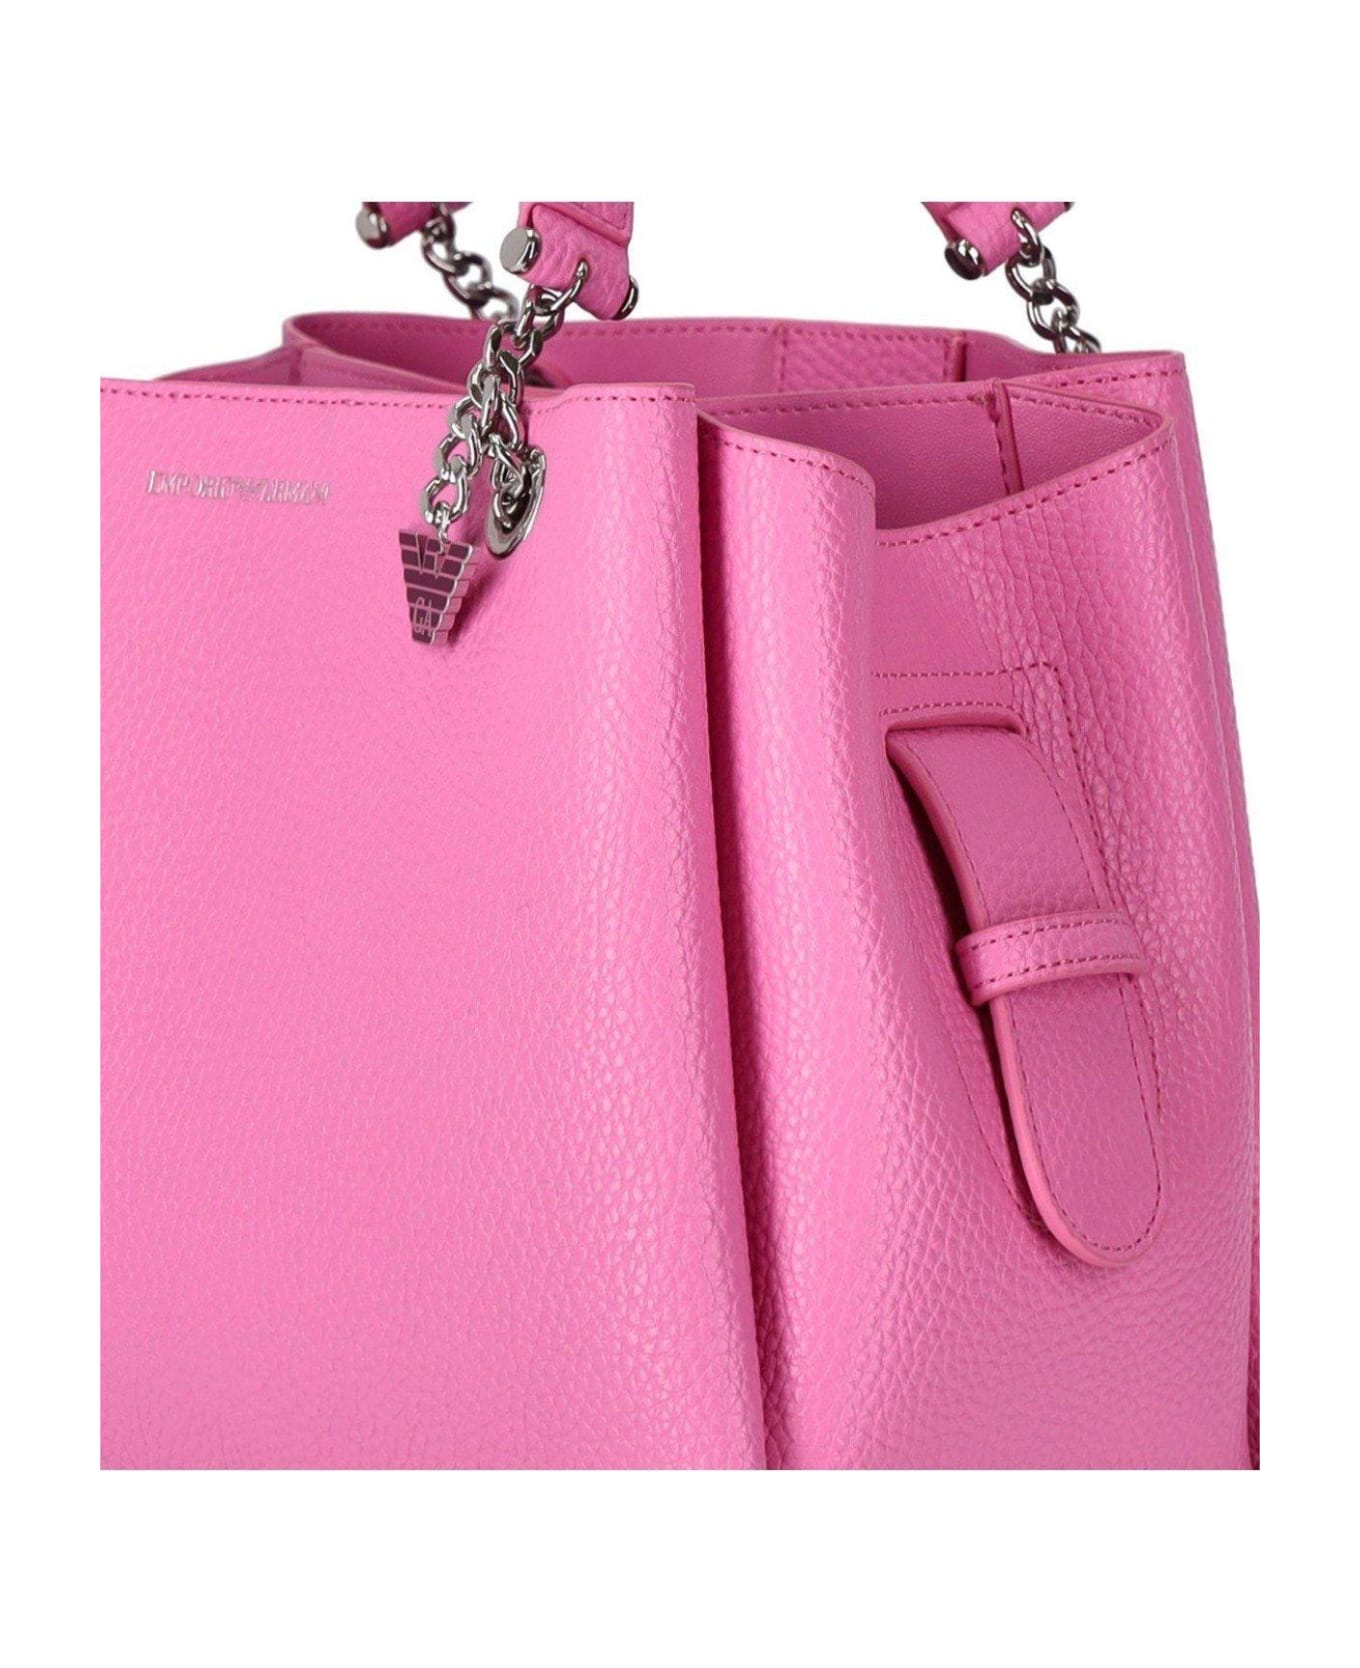 Emporio Armani Logo Printed Charm Tote Bag - Pink